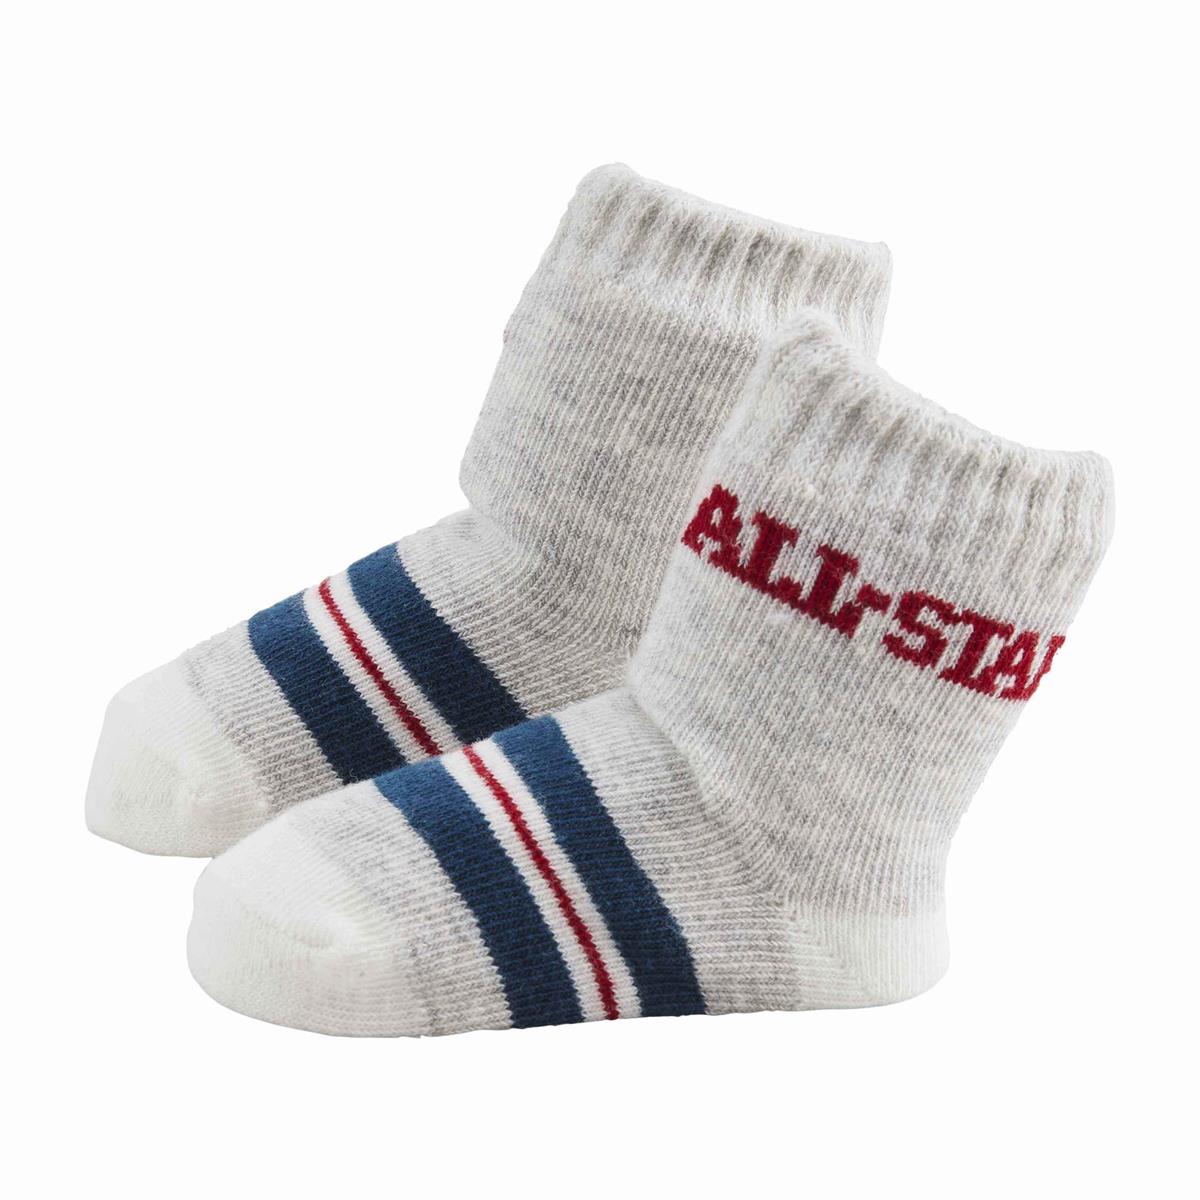 "All Star" Striped Socks - Madison's Niche 